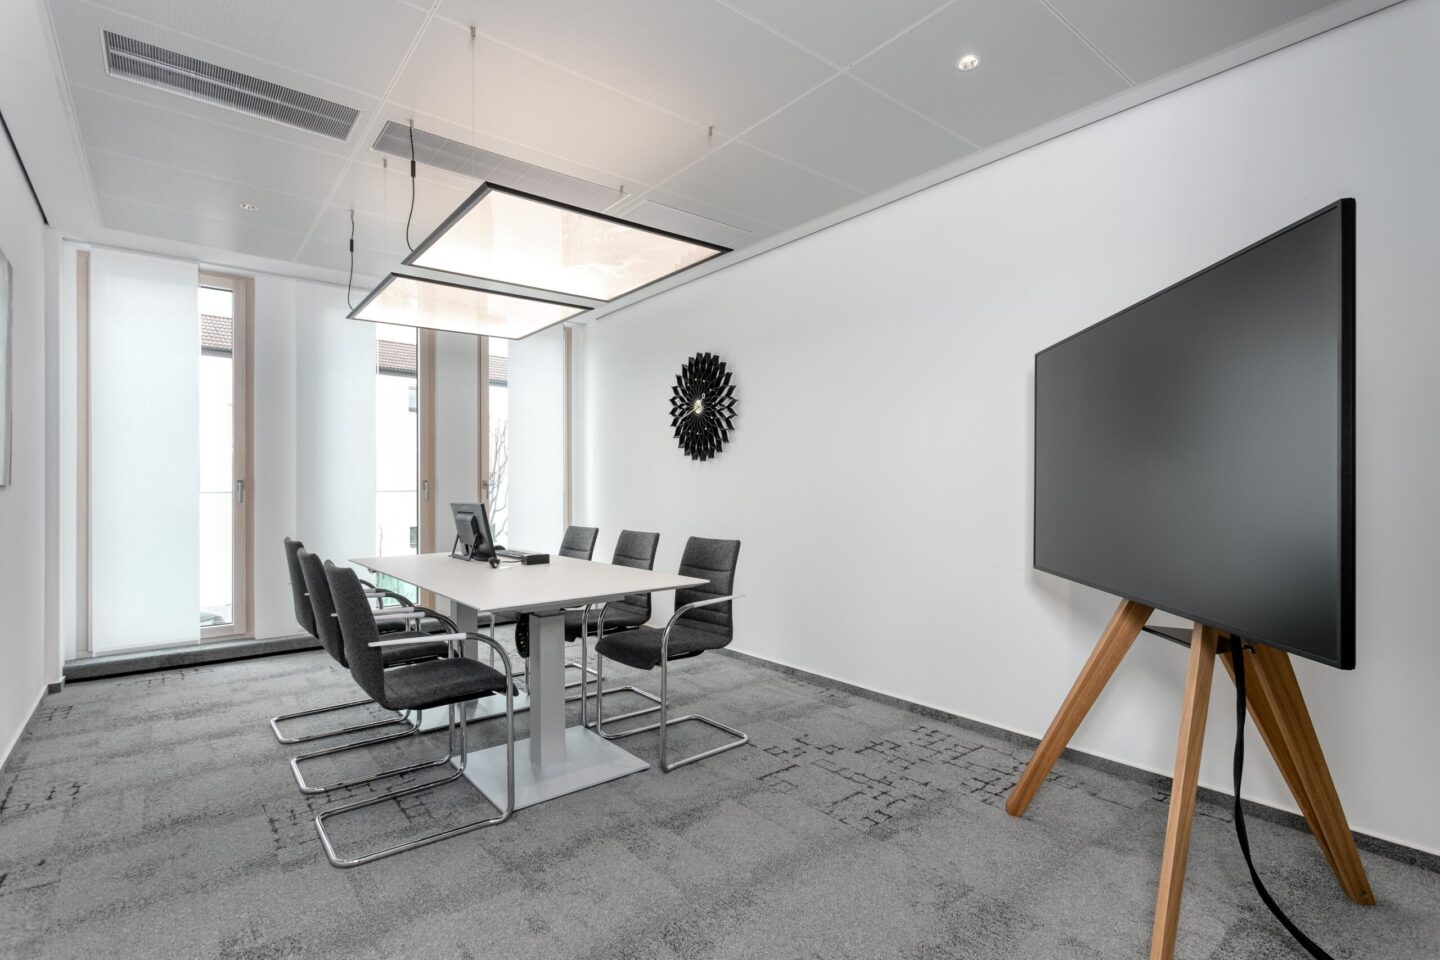 Sparkasse Bühl – Main Office │ modern meeting rooms │ flexible furnishing